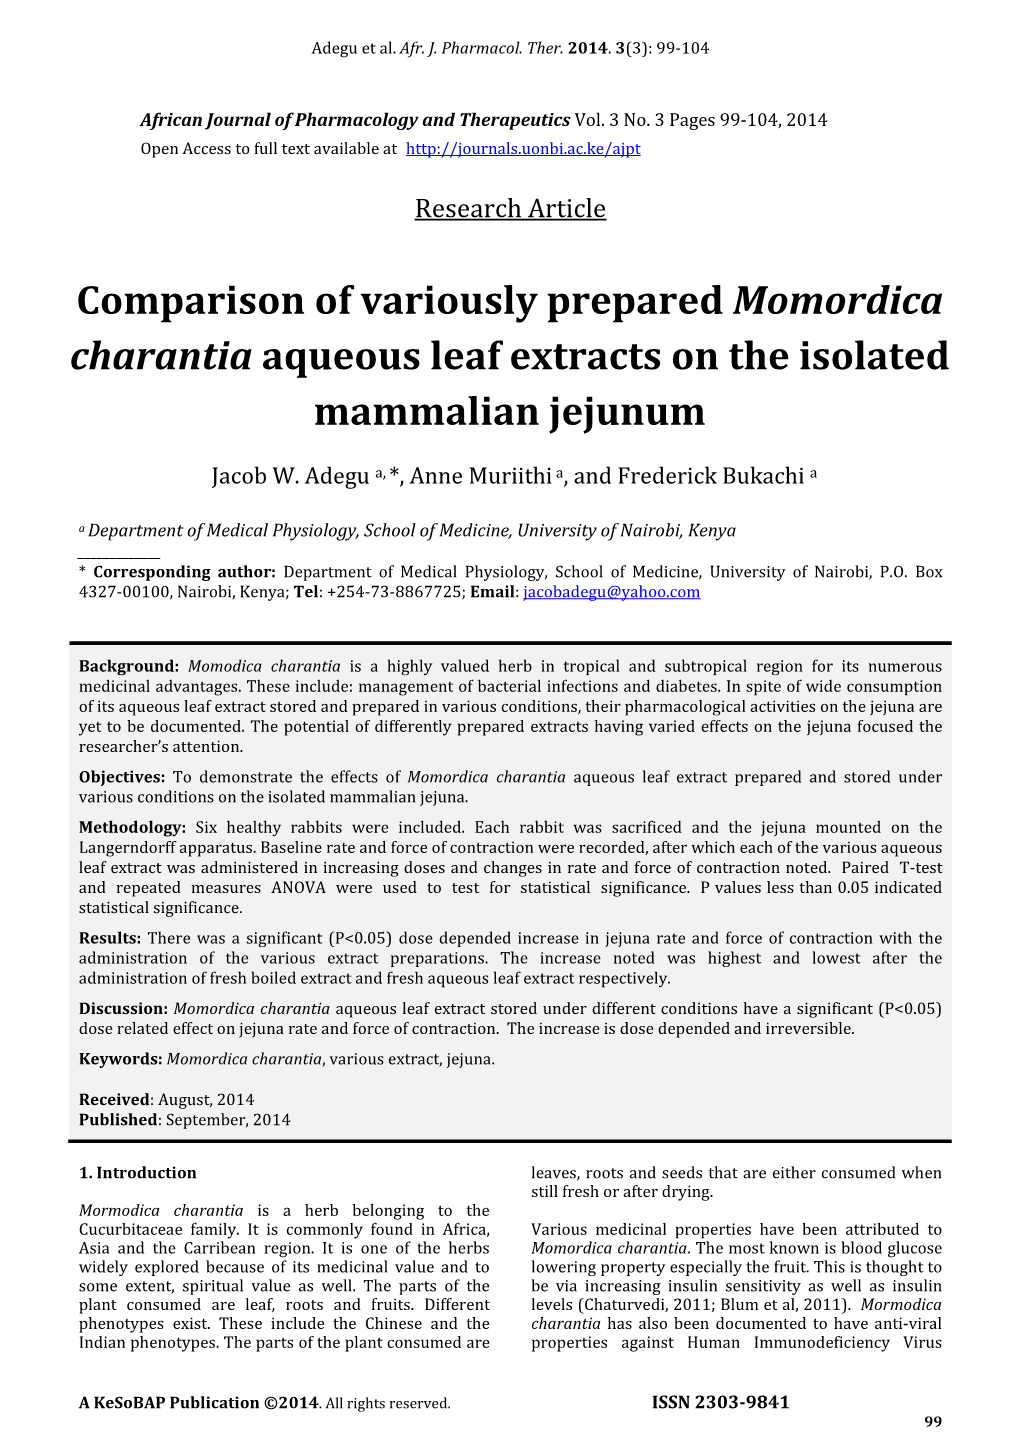 Comparison of Variously Prepared Momordica Charantia Aqueous Leaf Extracts on the Isolated Mammalian Jejunum